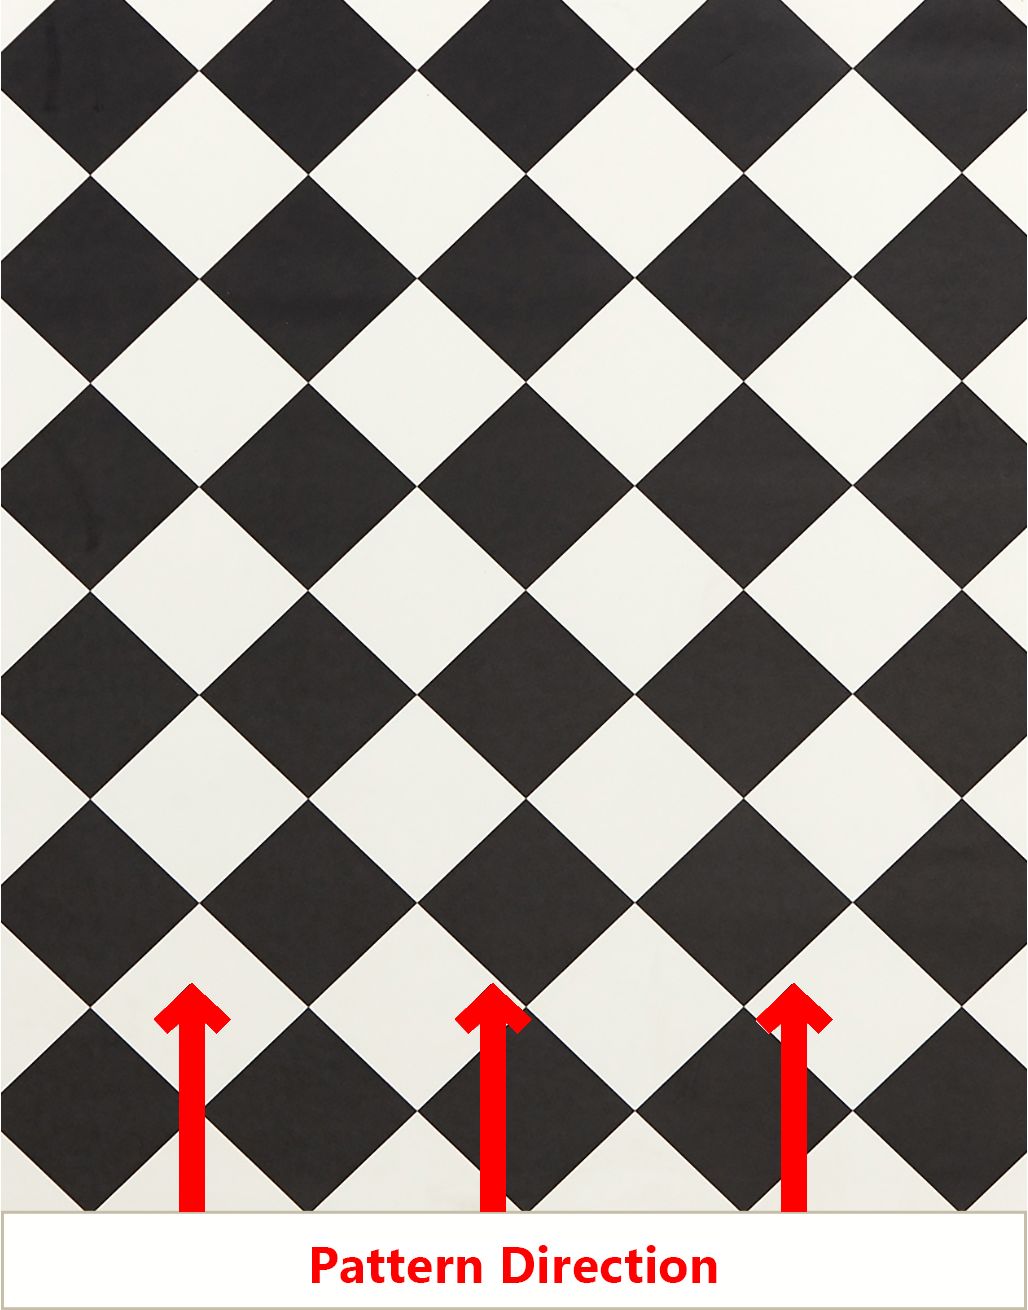 Monochrome - Chessboard 3